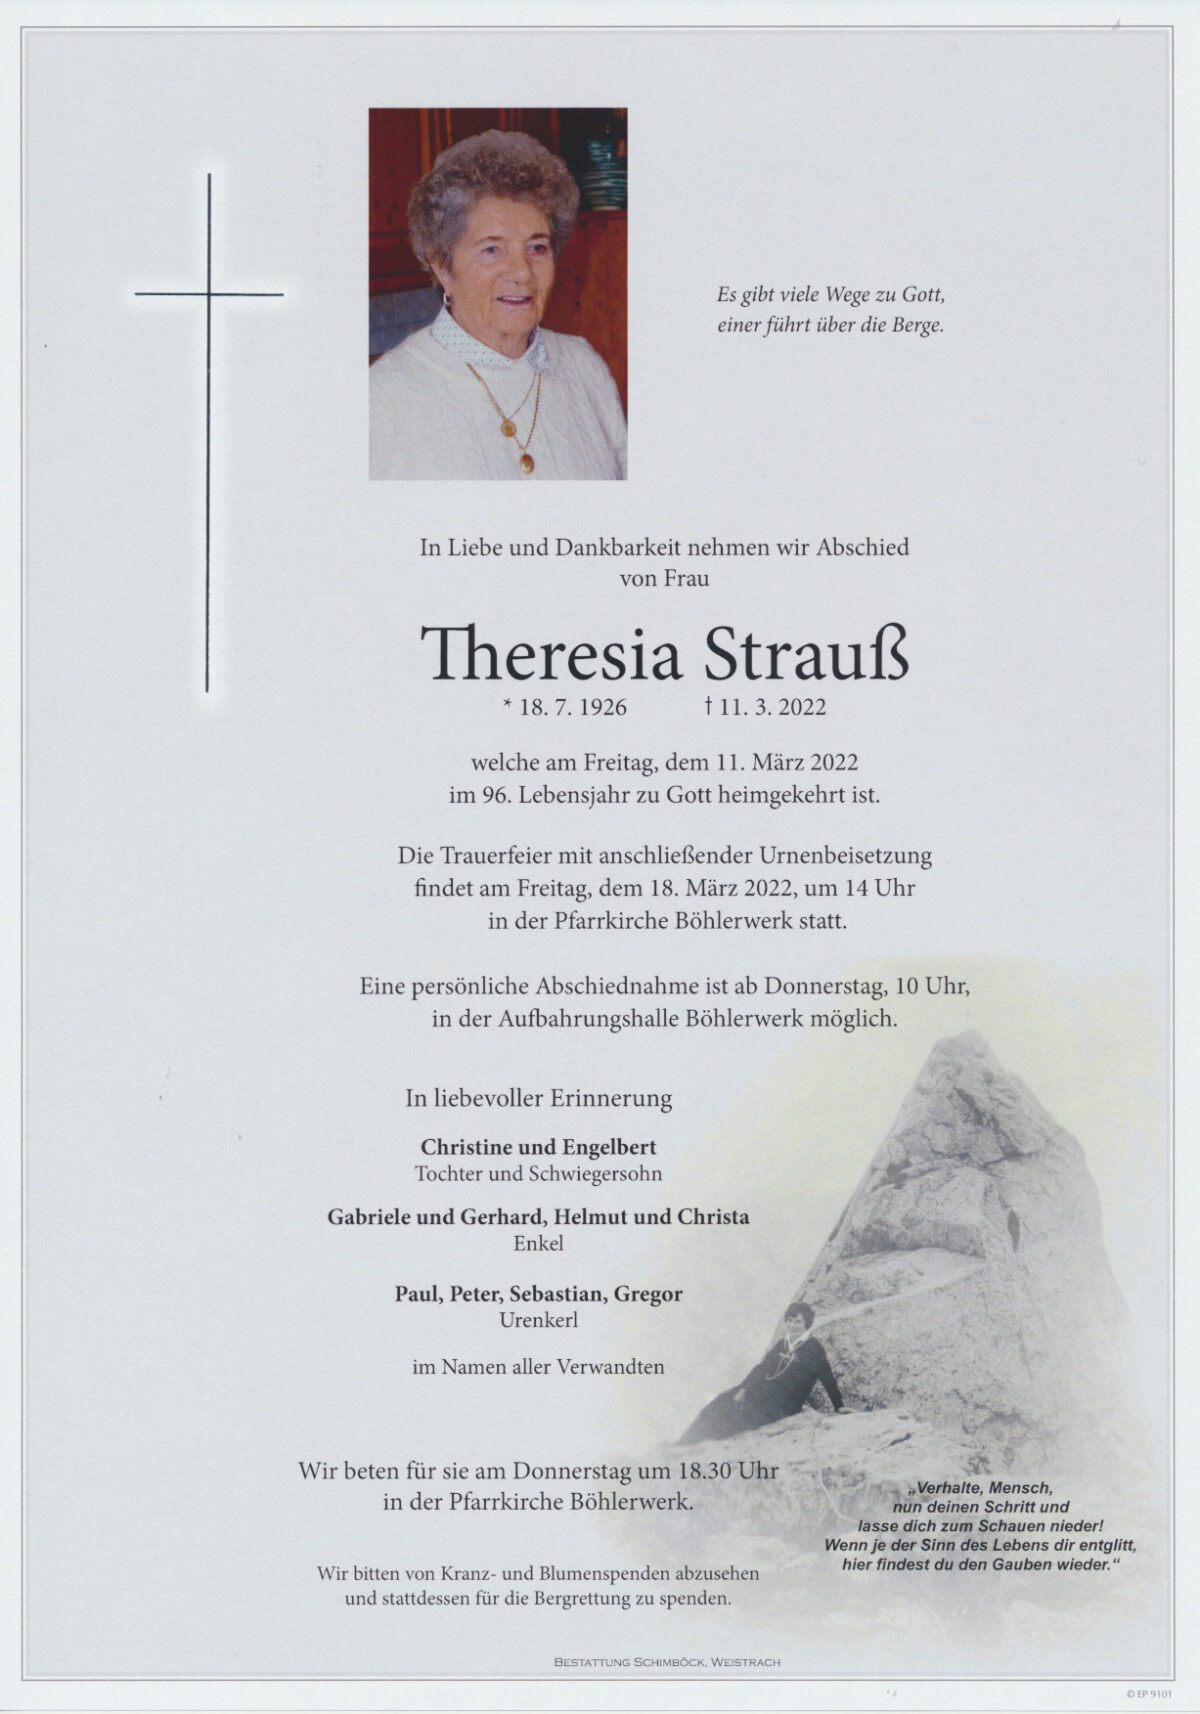 Theresia Strauß